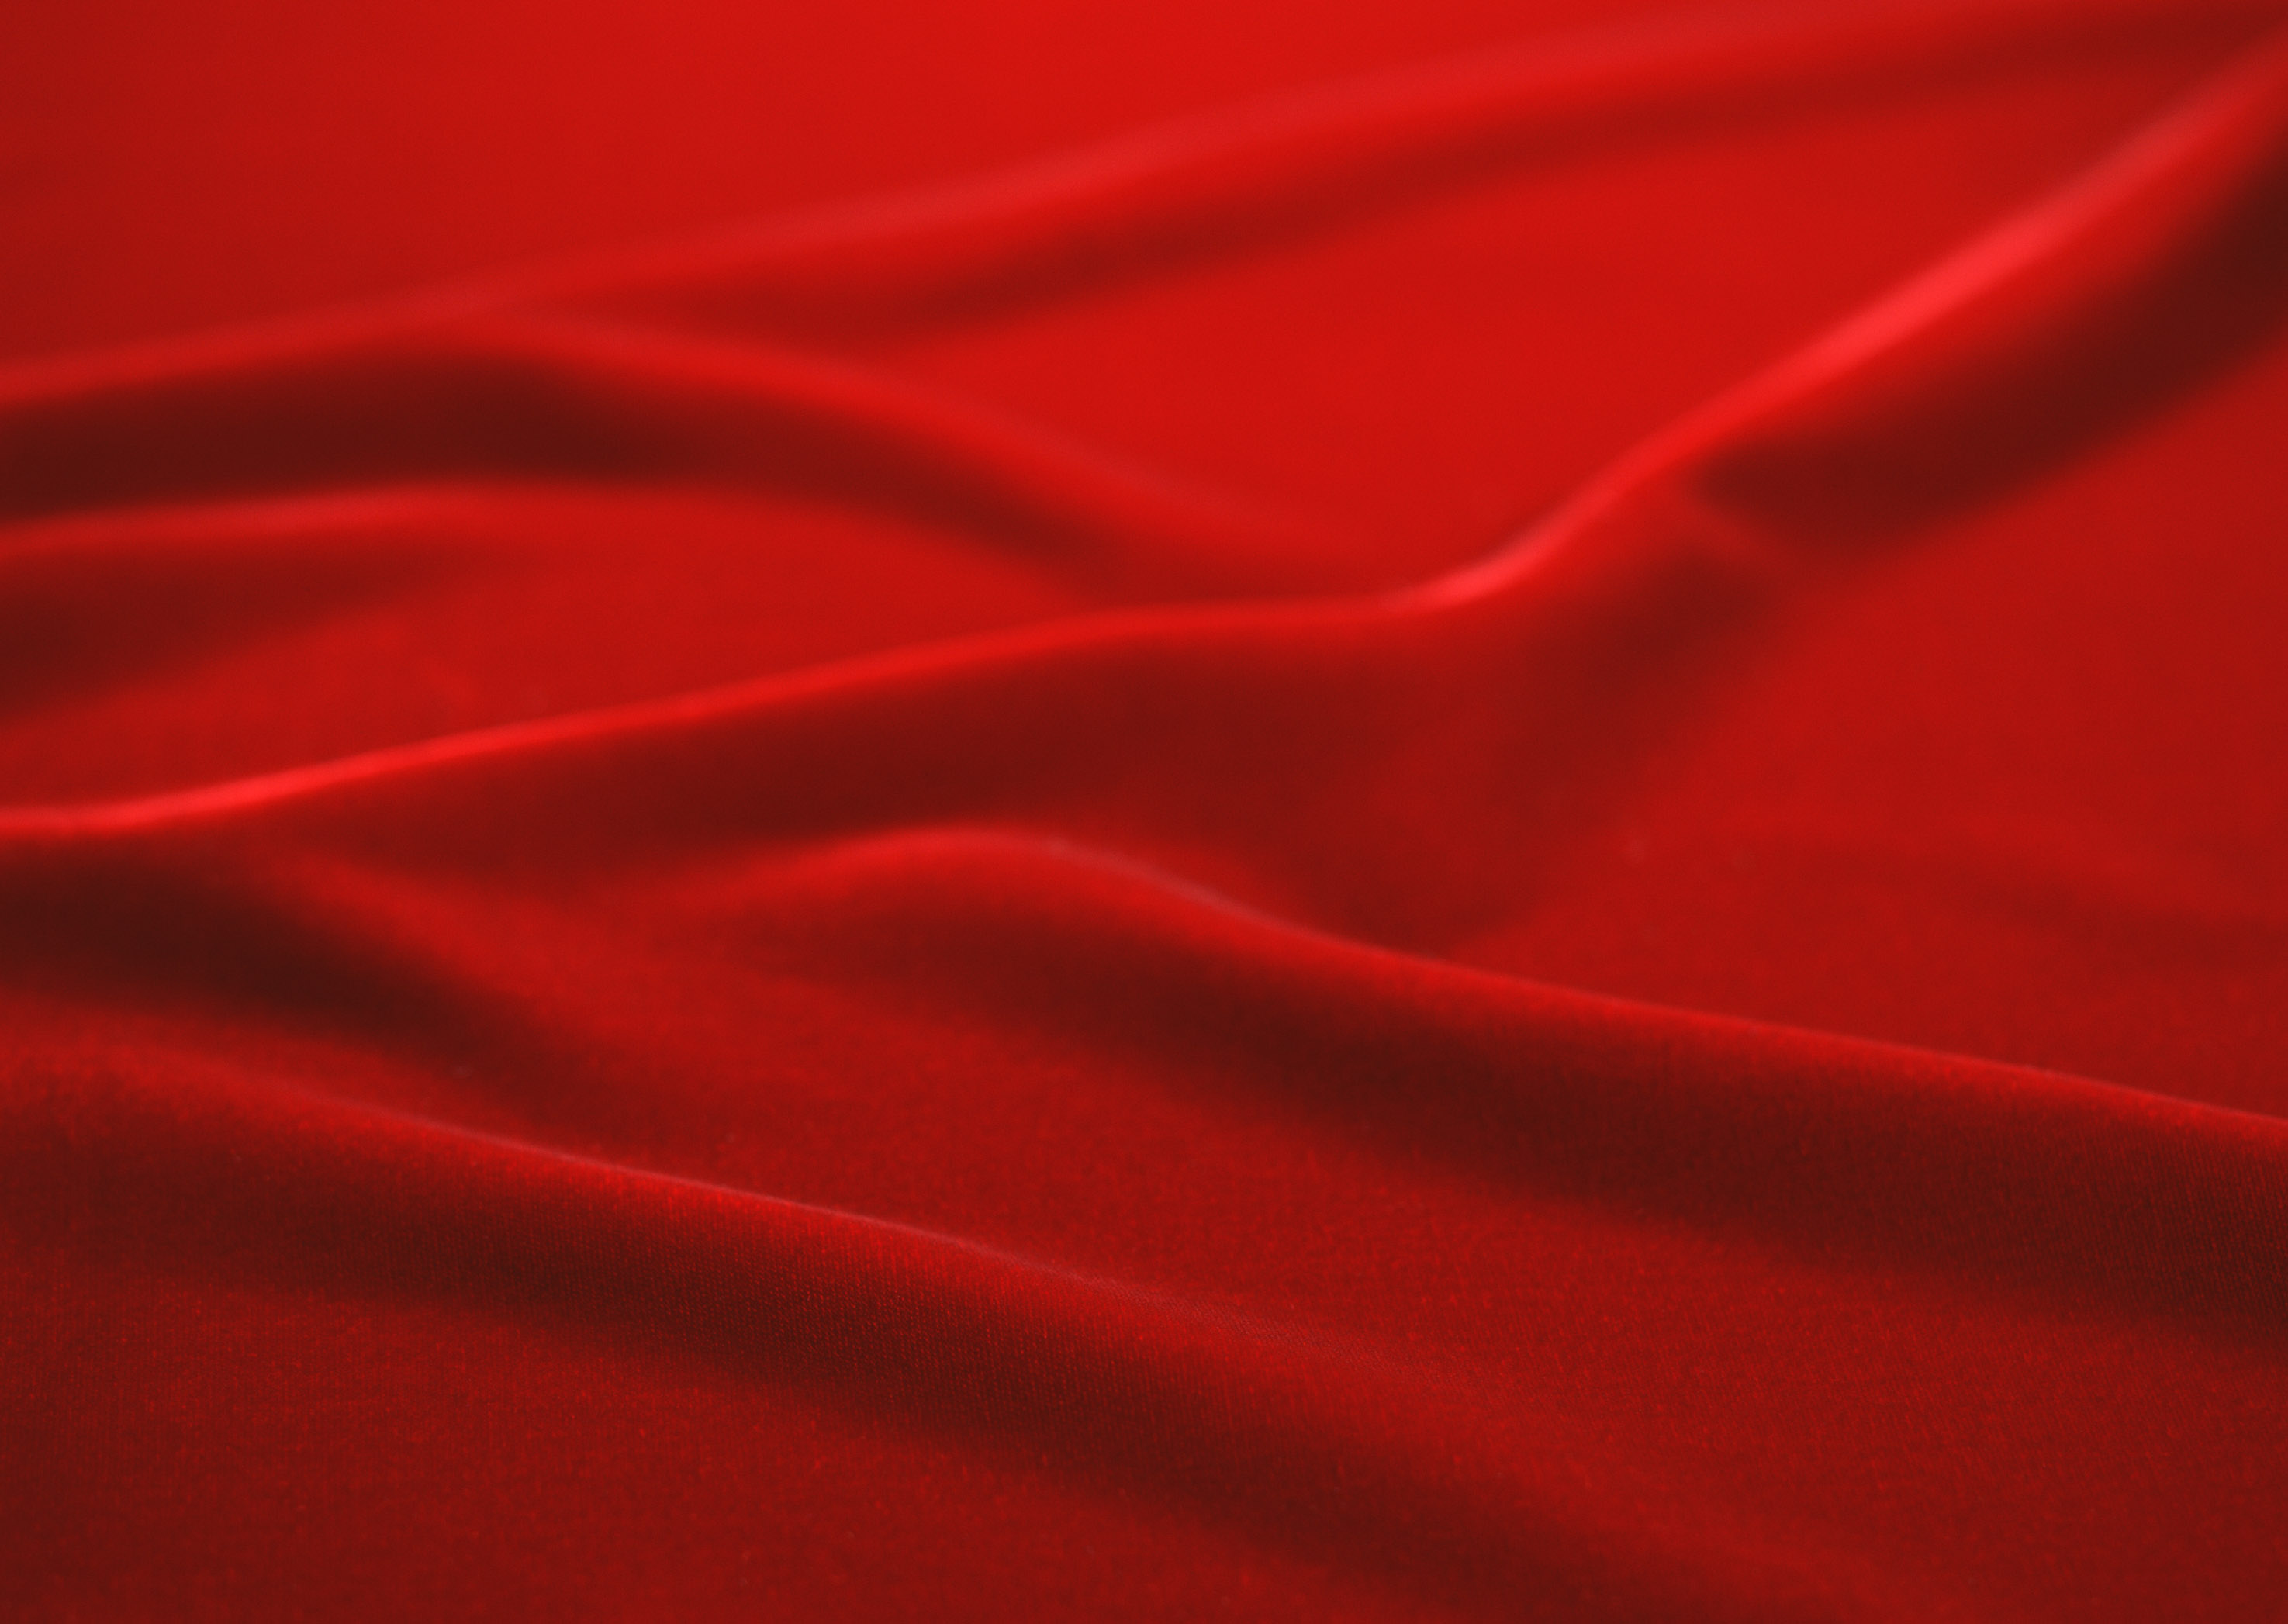 Red Fabric by severianofilho on DeviantArt